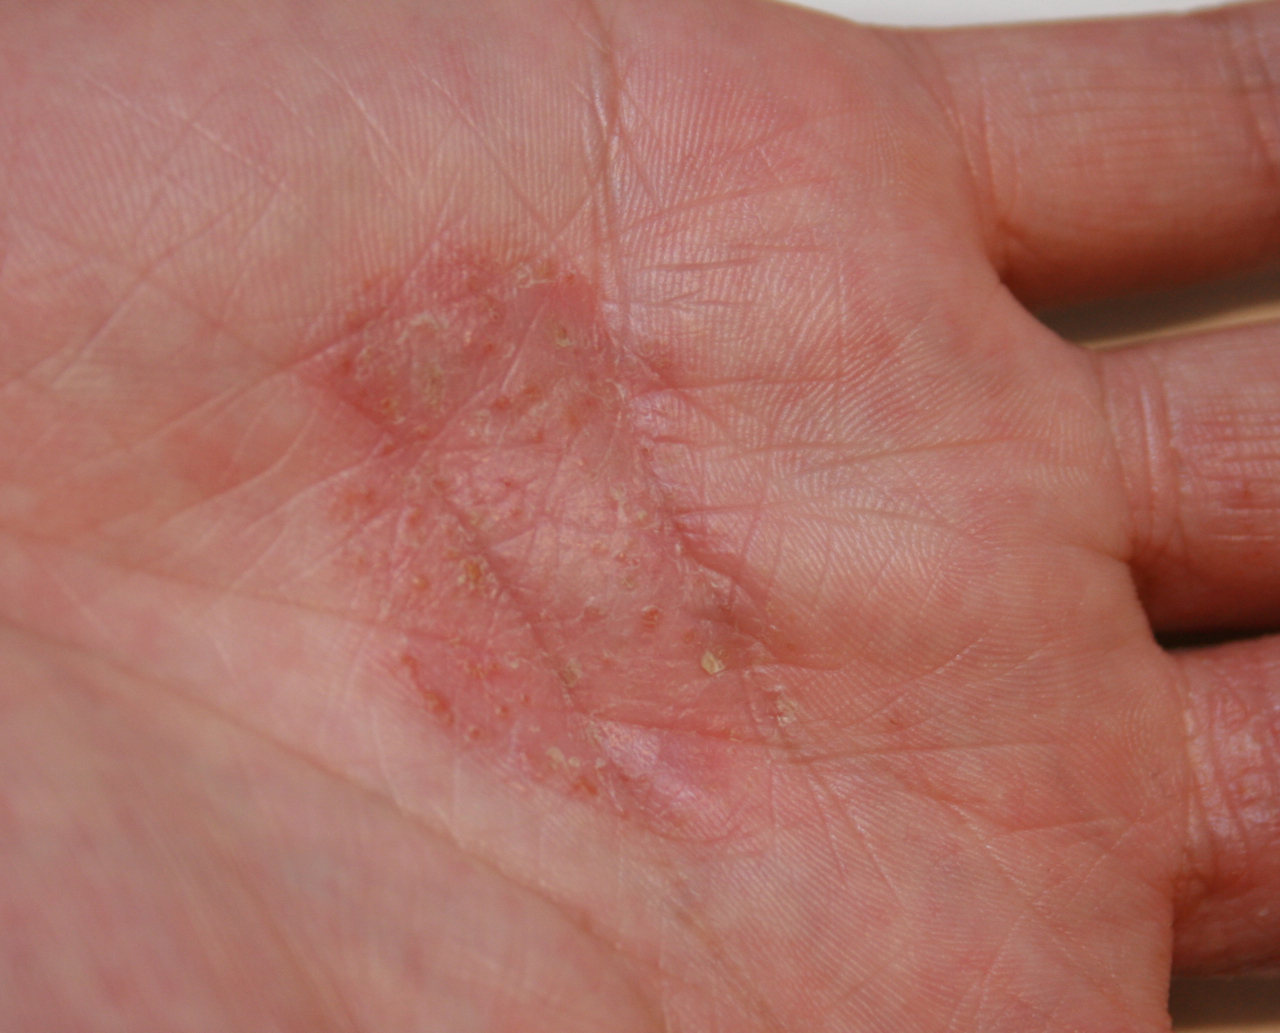 eczema on hands treatment